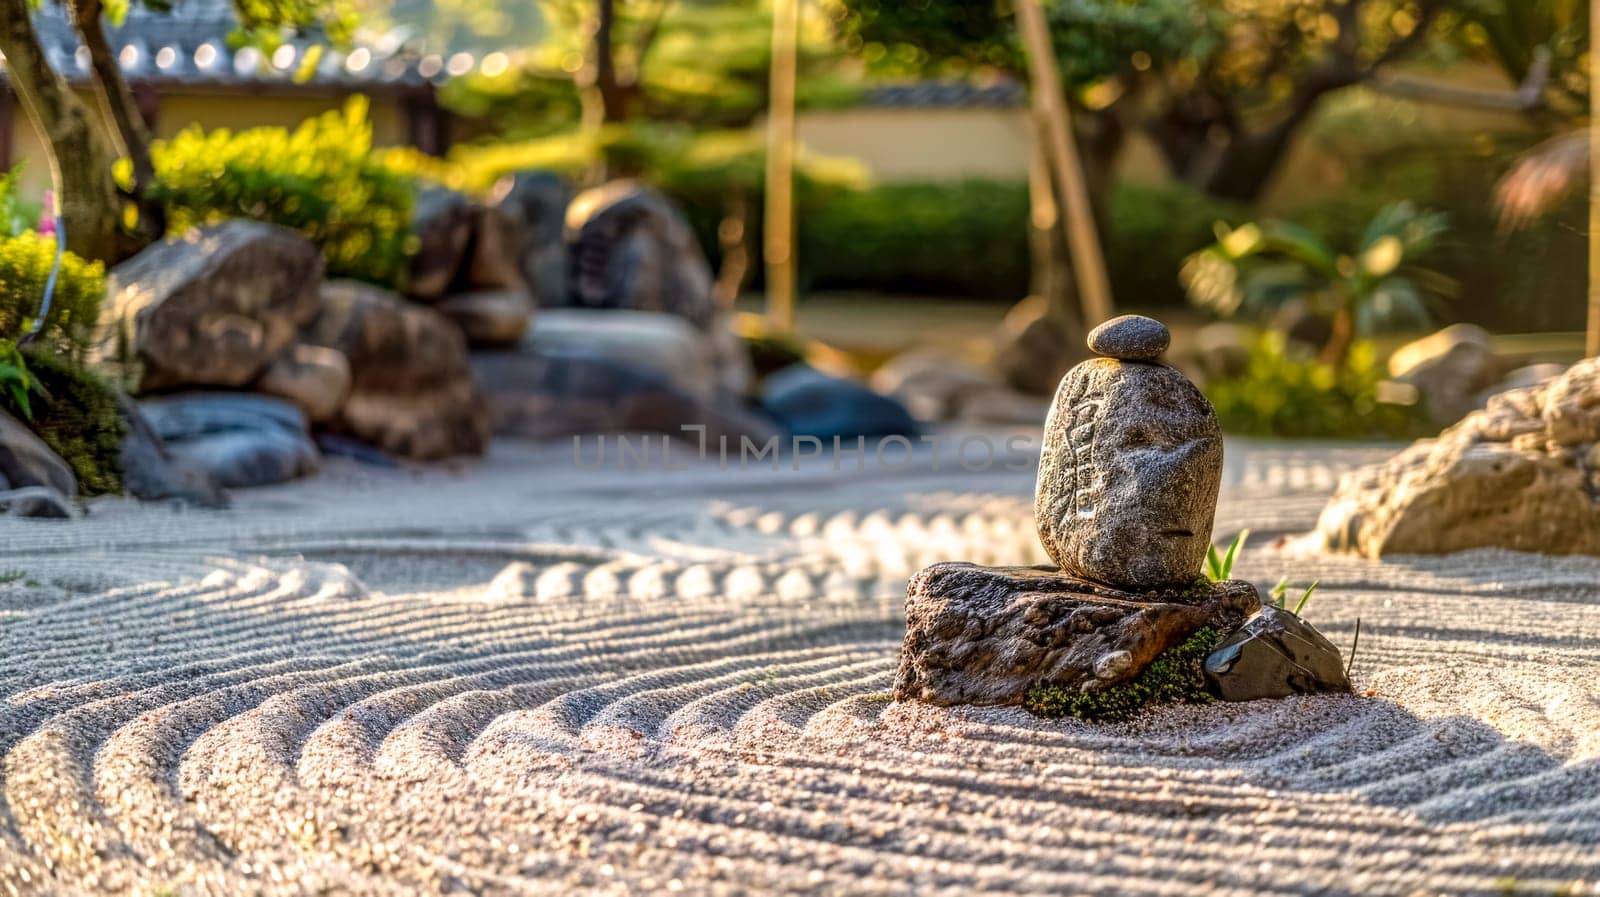 Serene zen garden at sunset by Edophoto